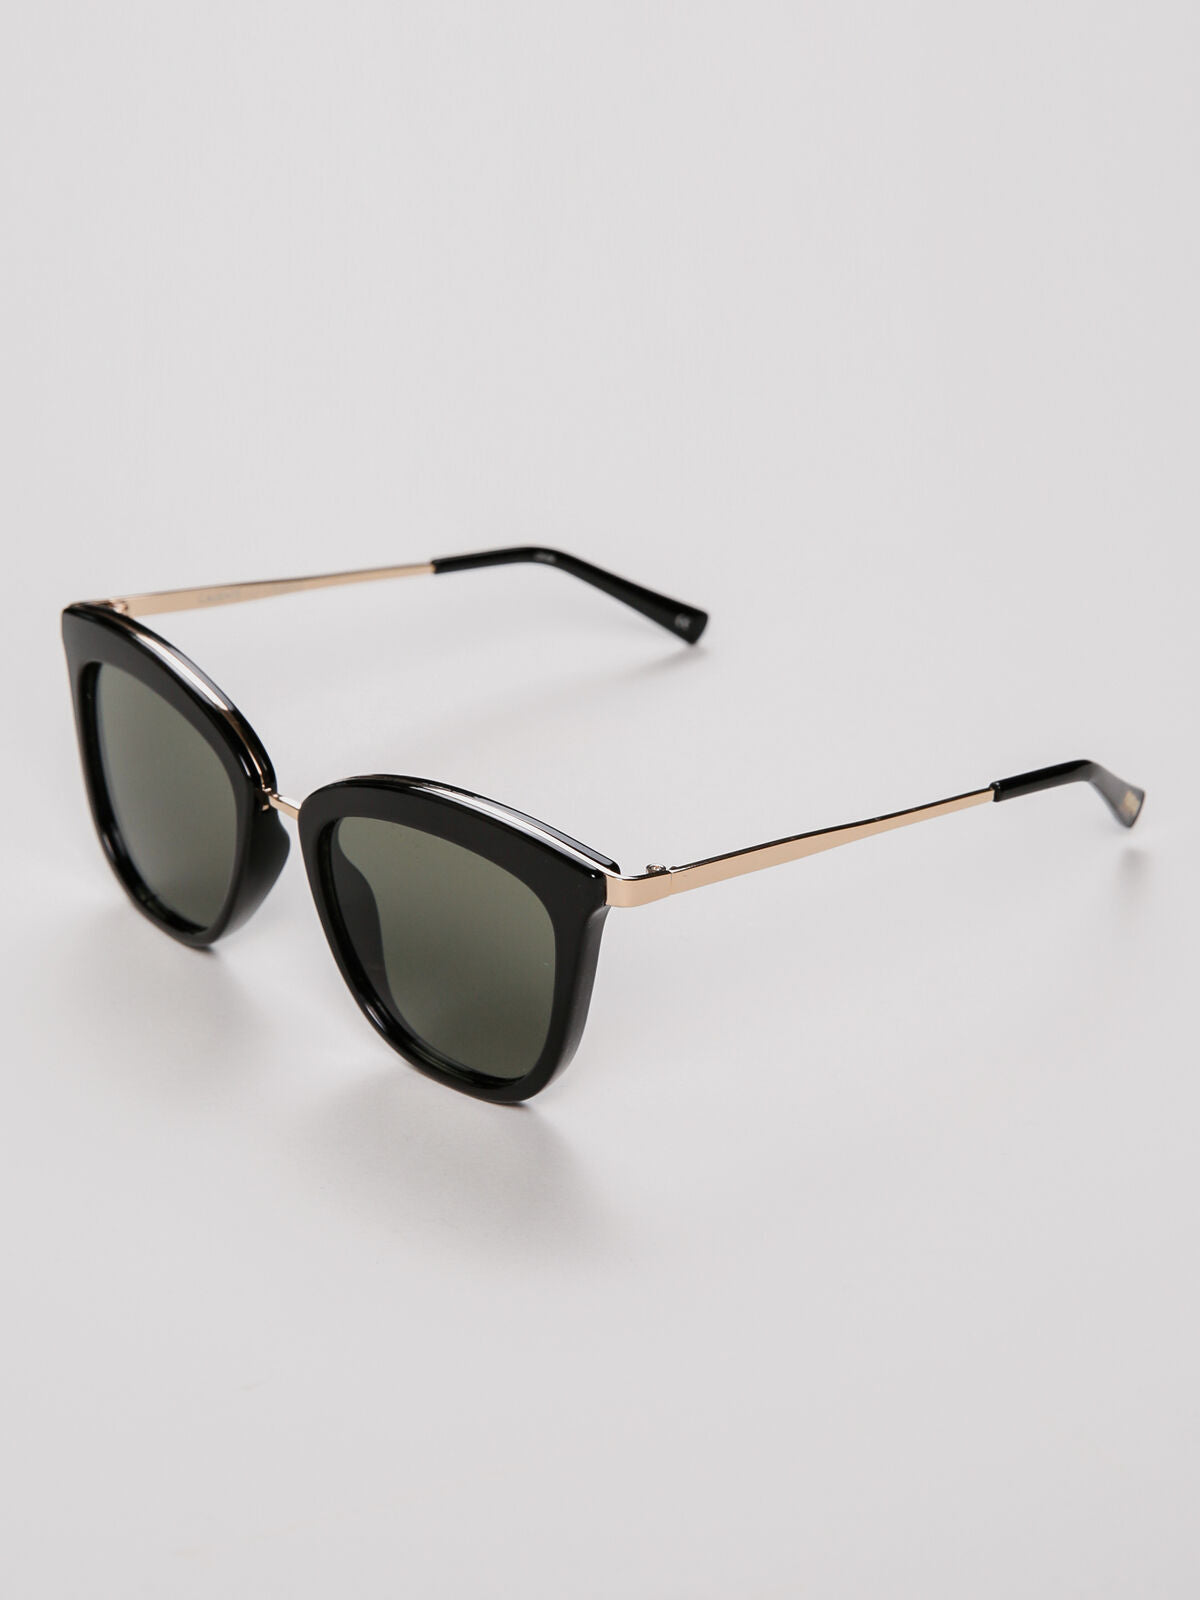 Le Caliente Sunglasses in Black &amp; Gold